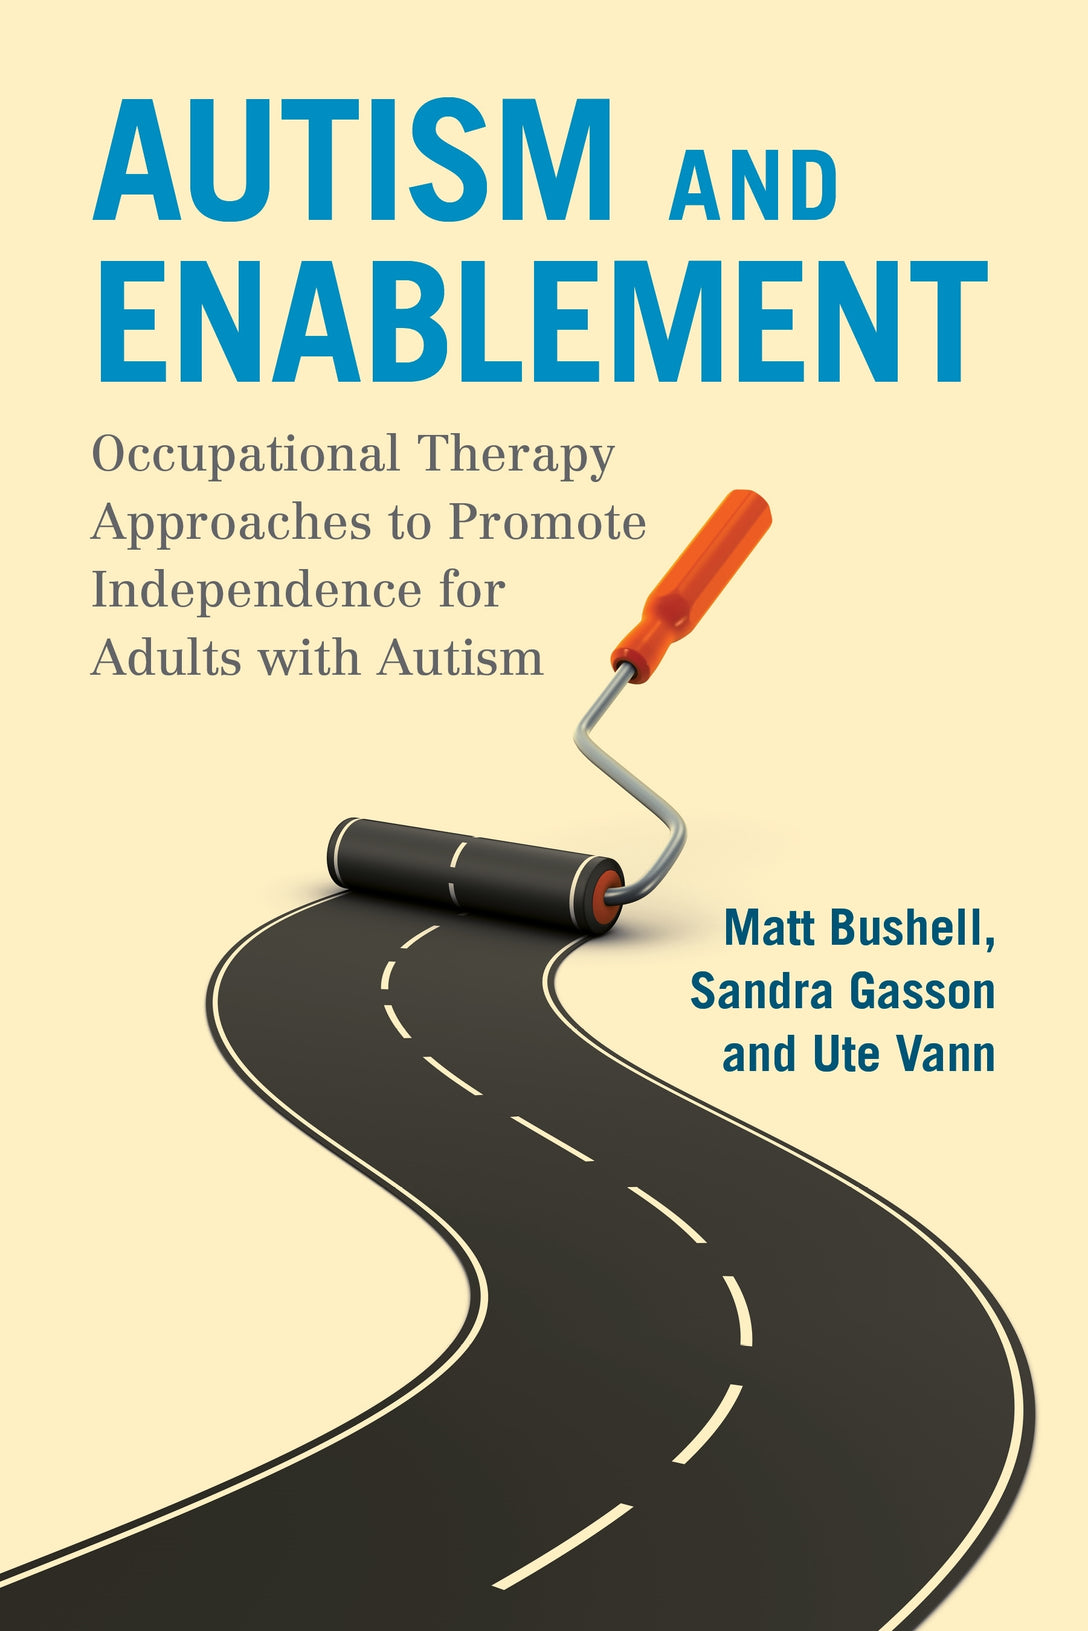 Autism and Enablement by Matt Bushell, Sandra Gasson, Ute Vann